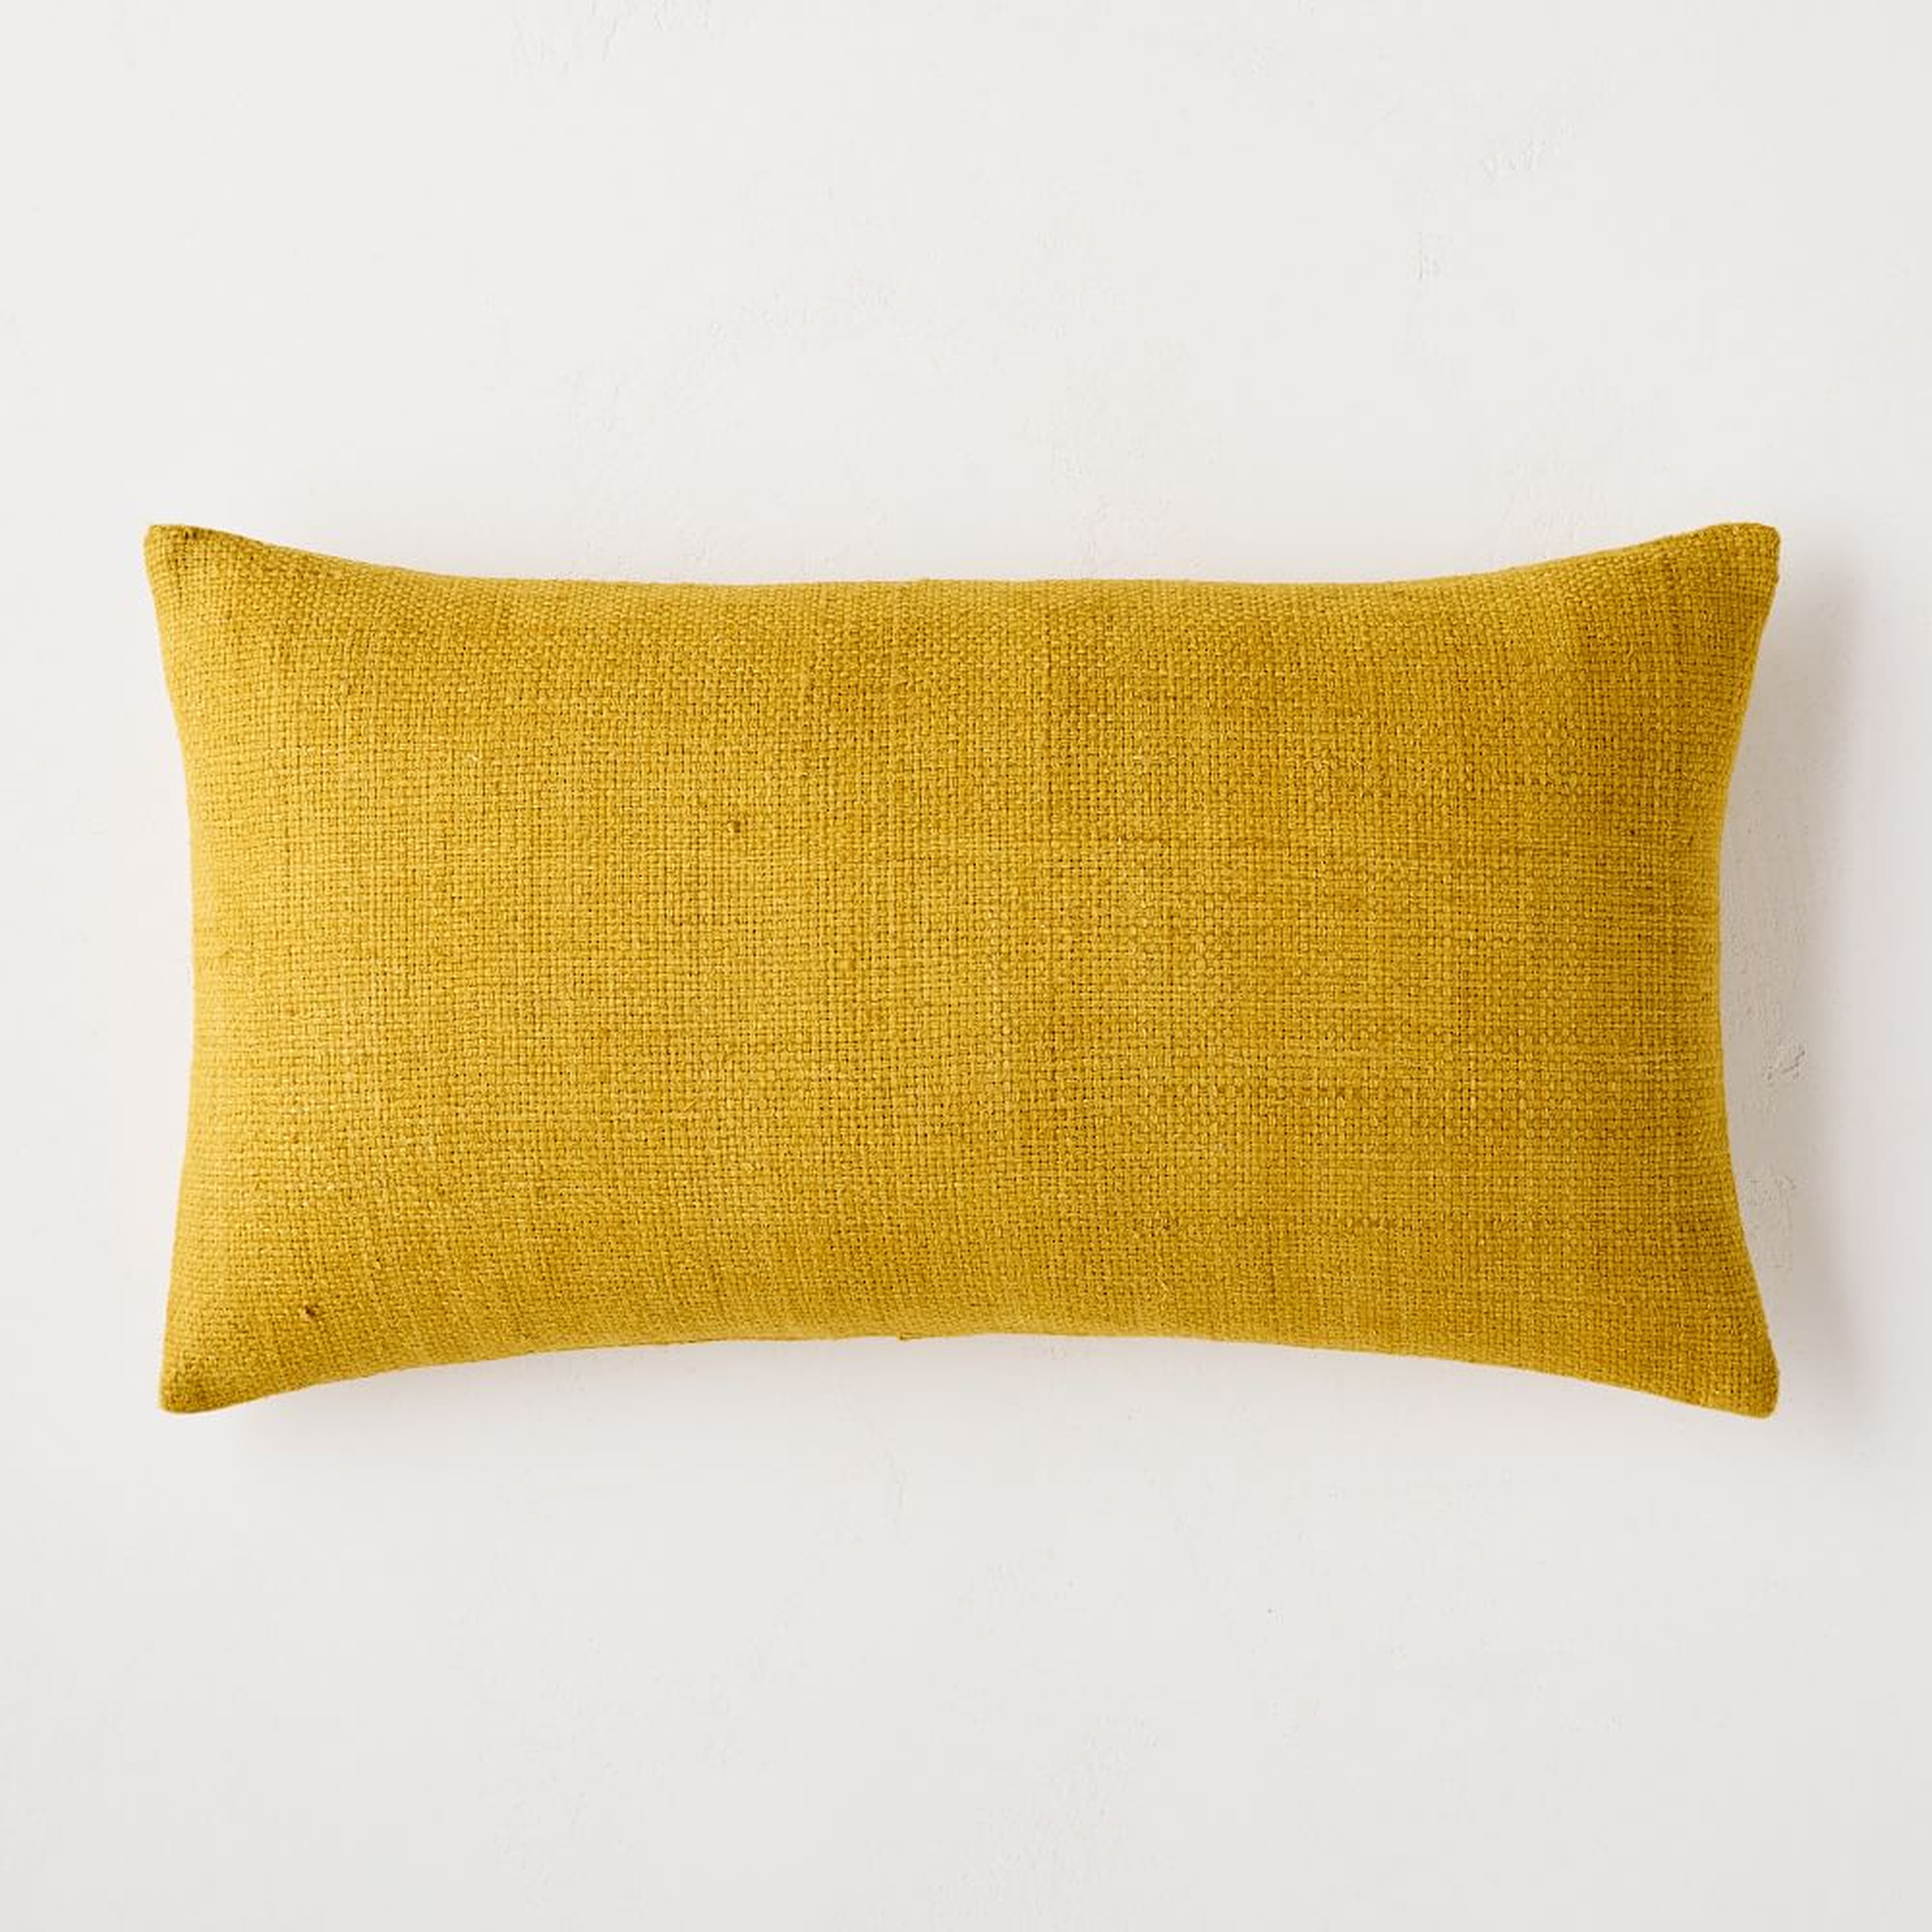 Silk Hand-Loomed Pillow Cover, 12"x21", Dark Horseradish - West Elm